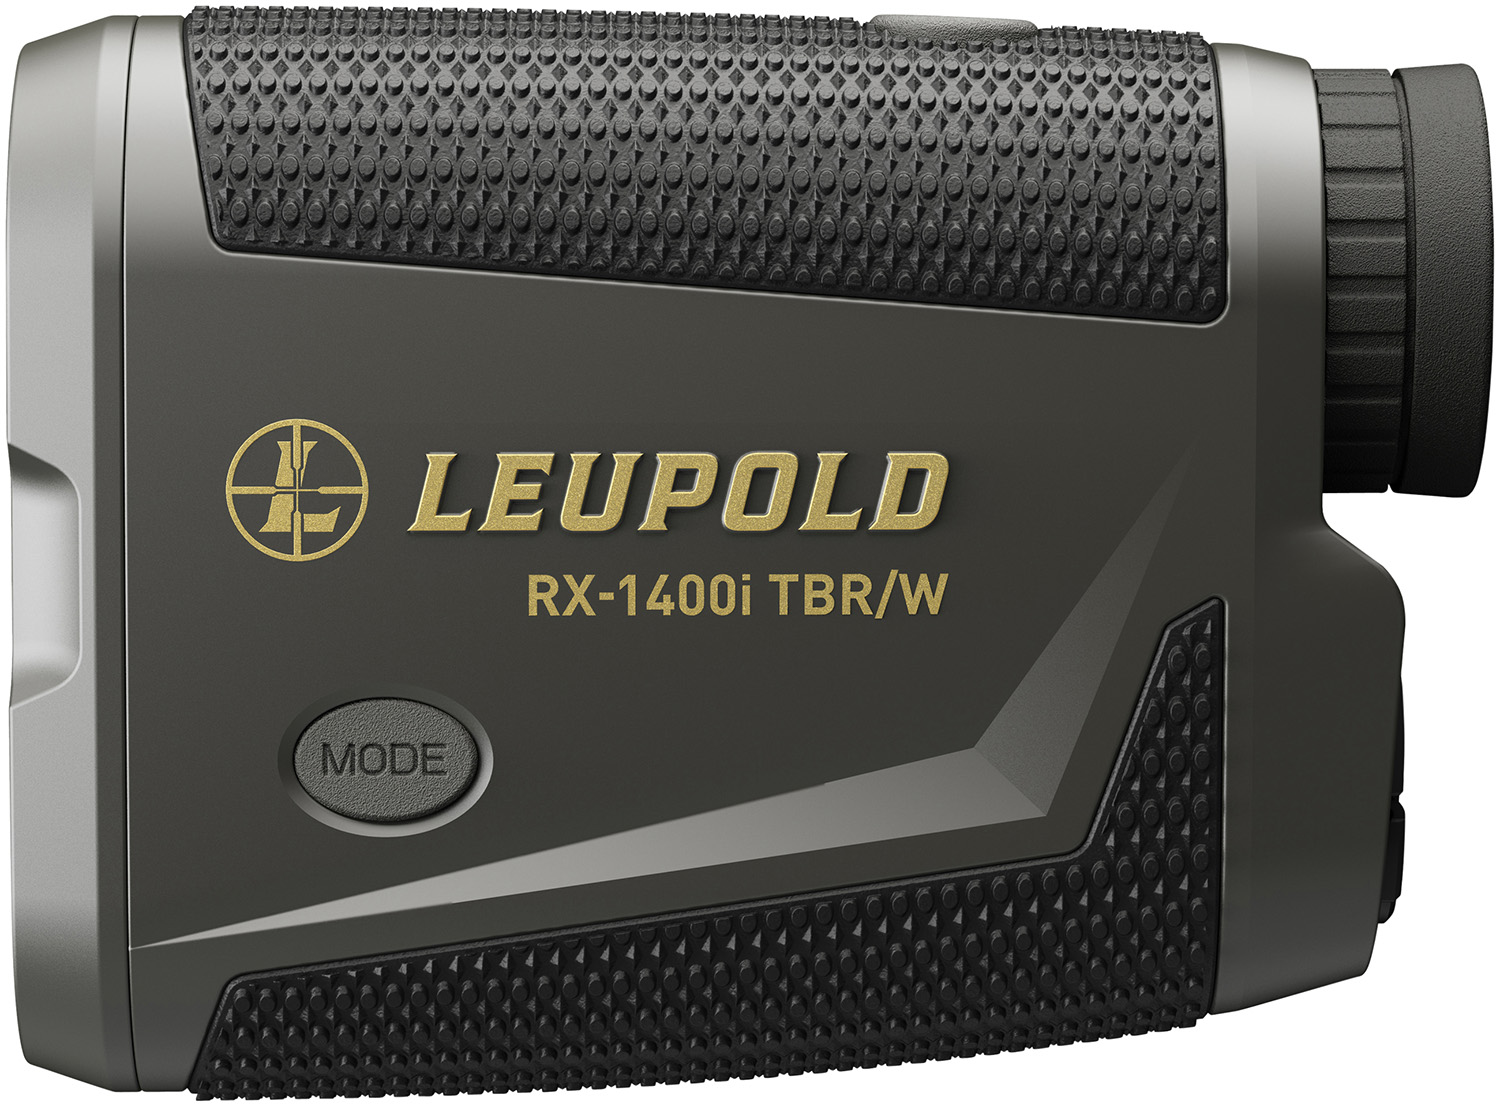 Leupold 183727 Rx 1400I TBR/W Gen2 Black/Gray 5X21mm 1400 yds Max Distance Red Toled Display Features Flightpath Technol